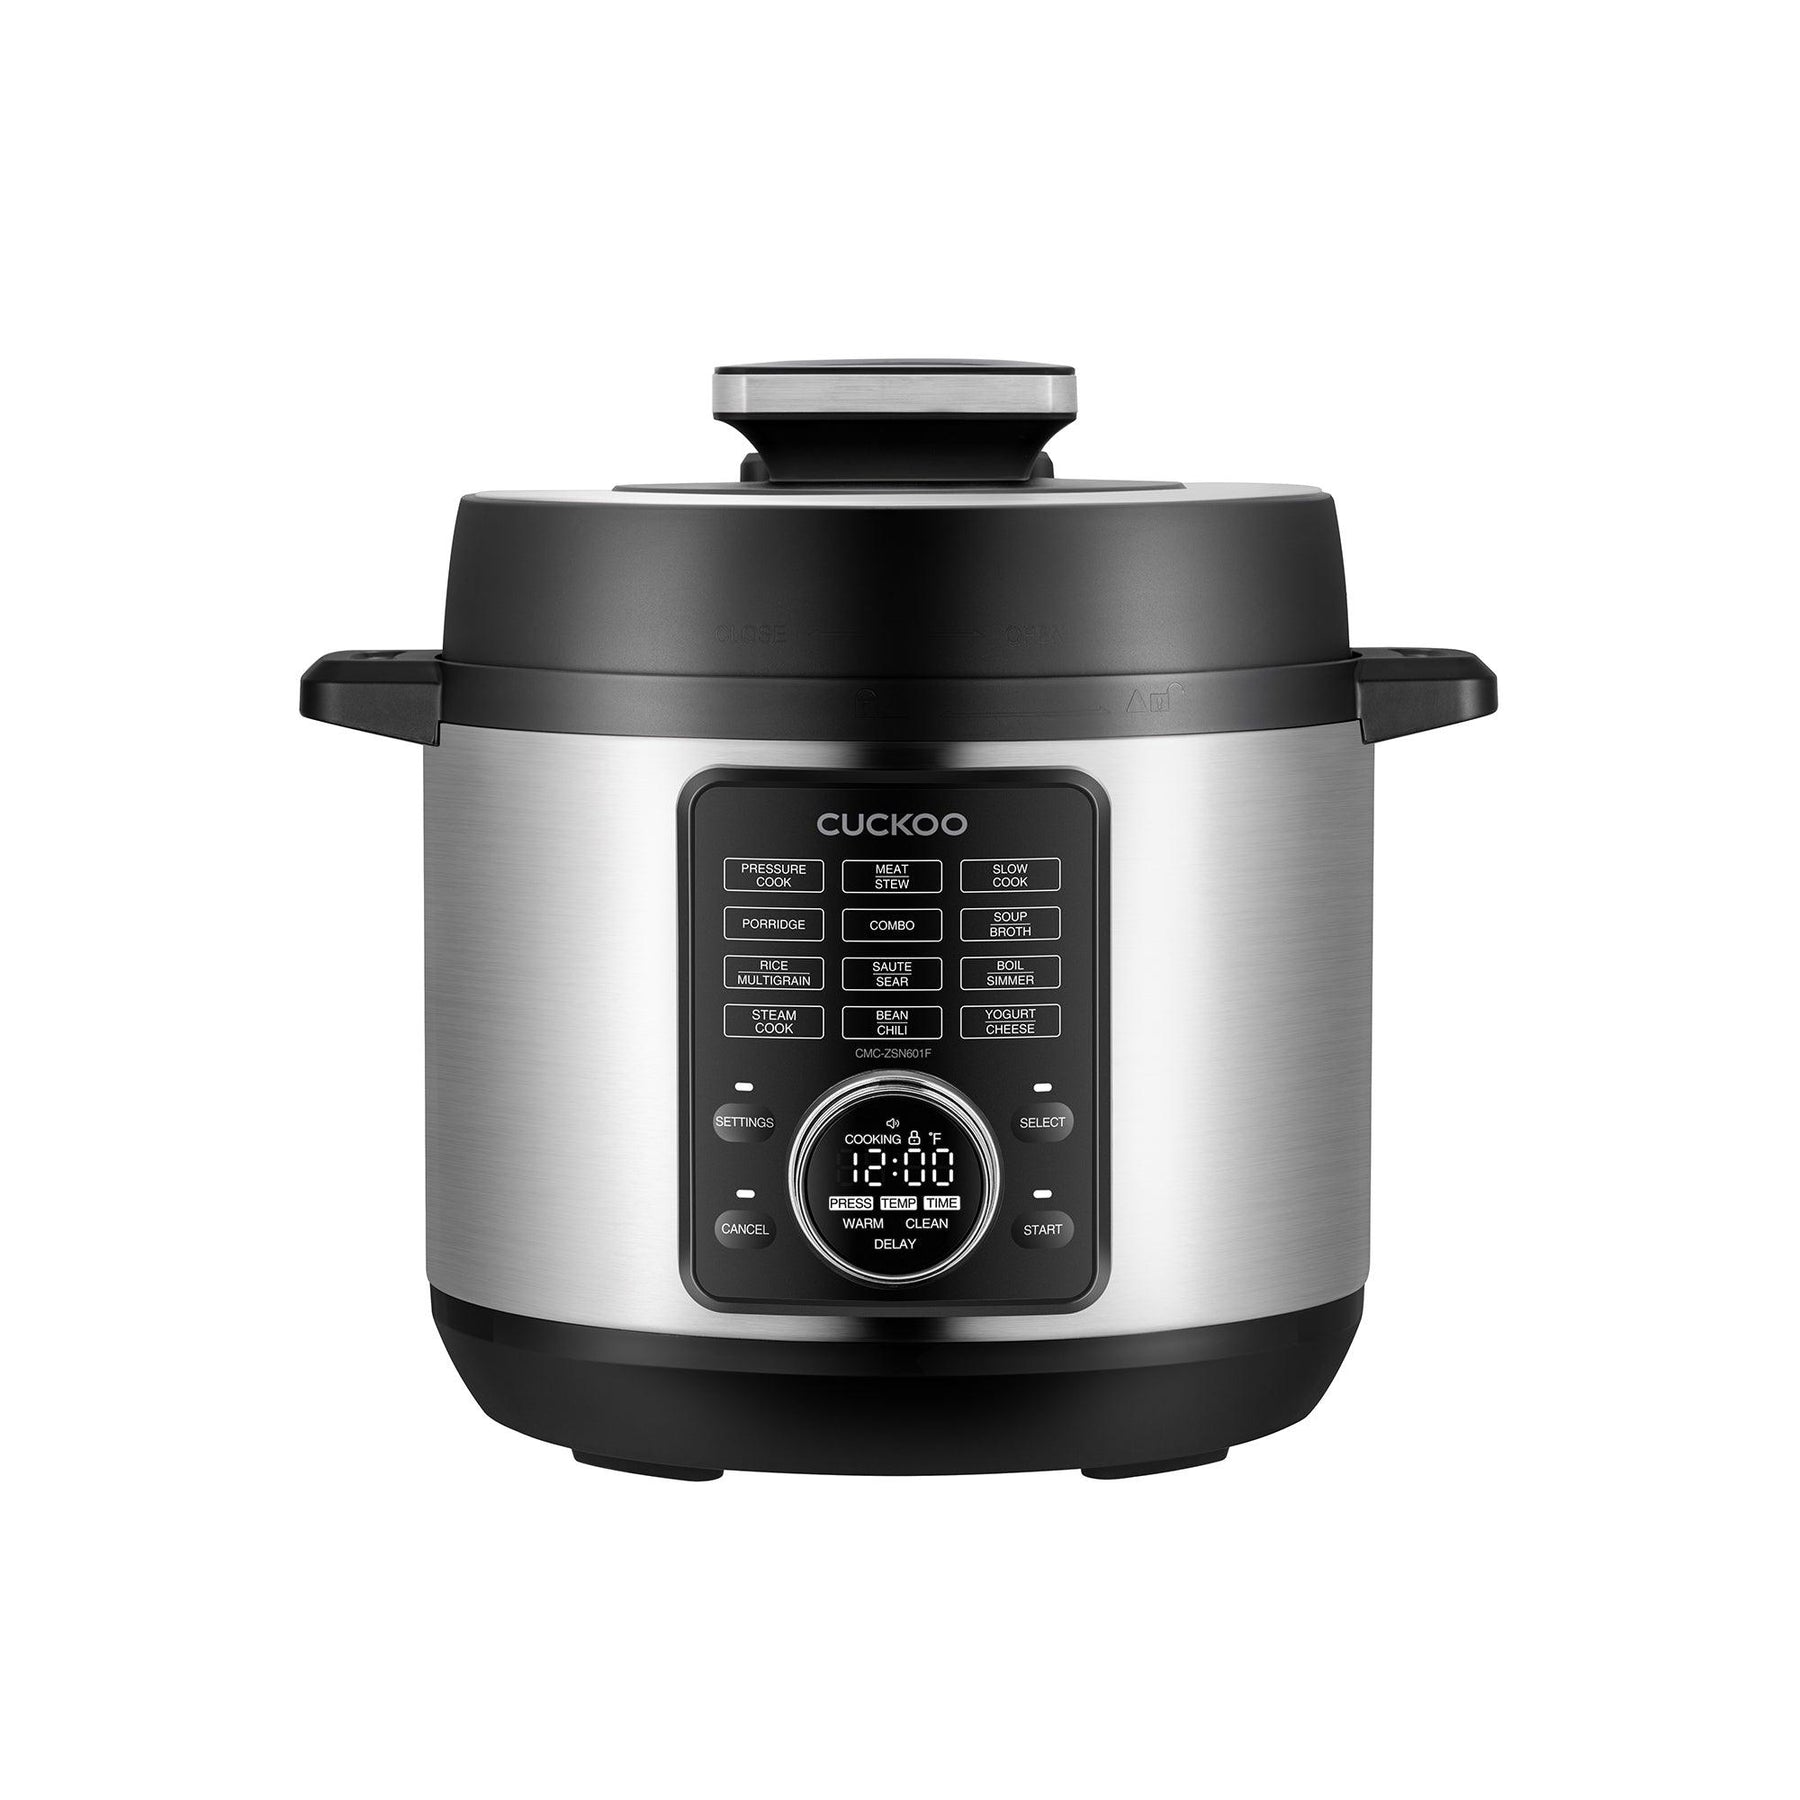 Power Pressure Cooker XL - 6qt - appliances - by owner - sale